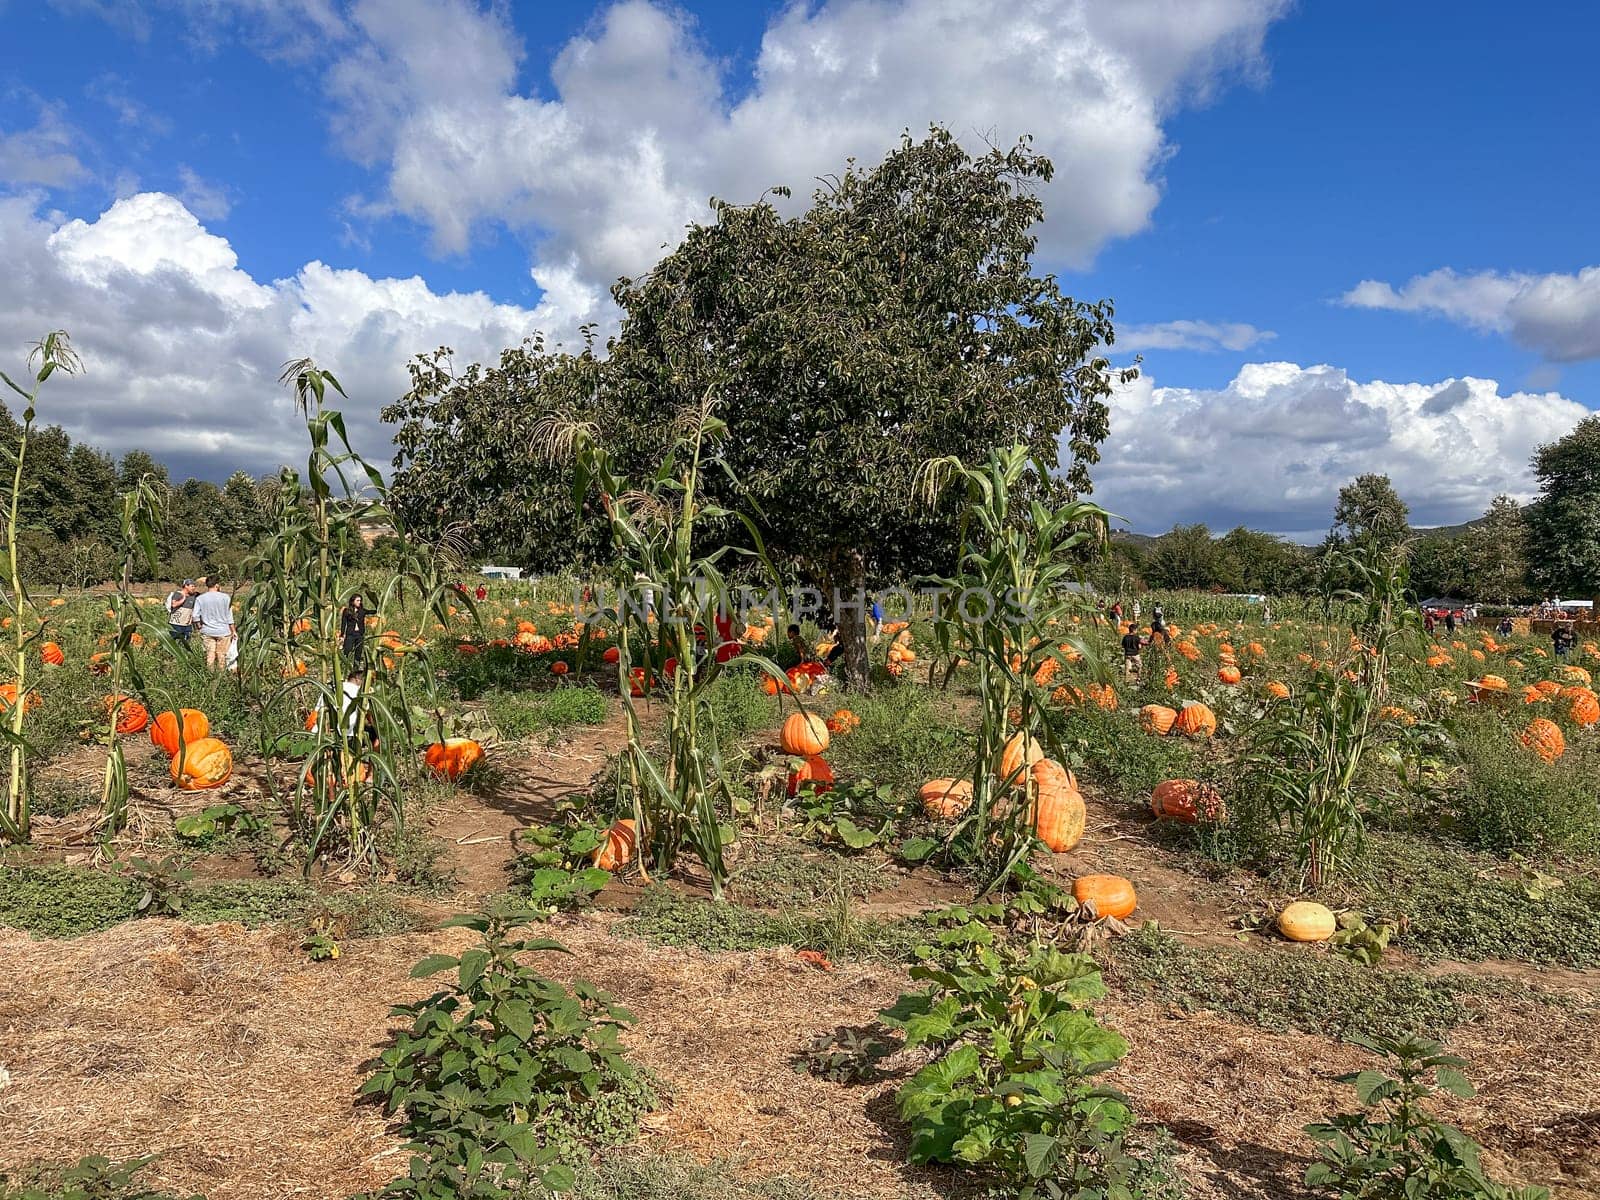 Autumn harvest of orange pumkins at hill side farmers field by Bonandbon